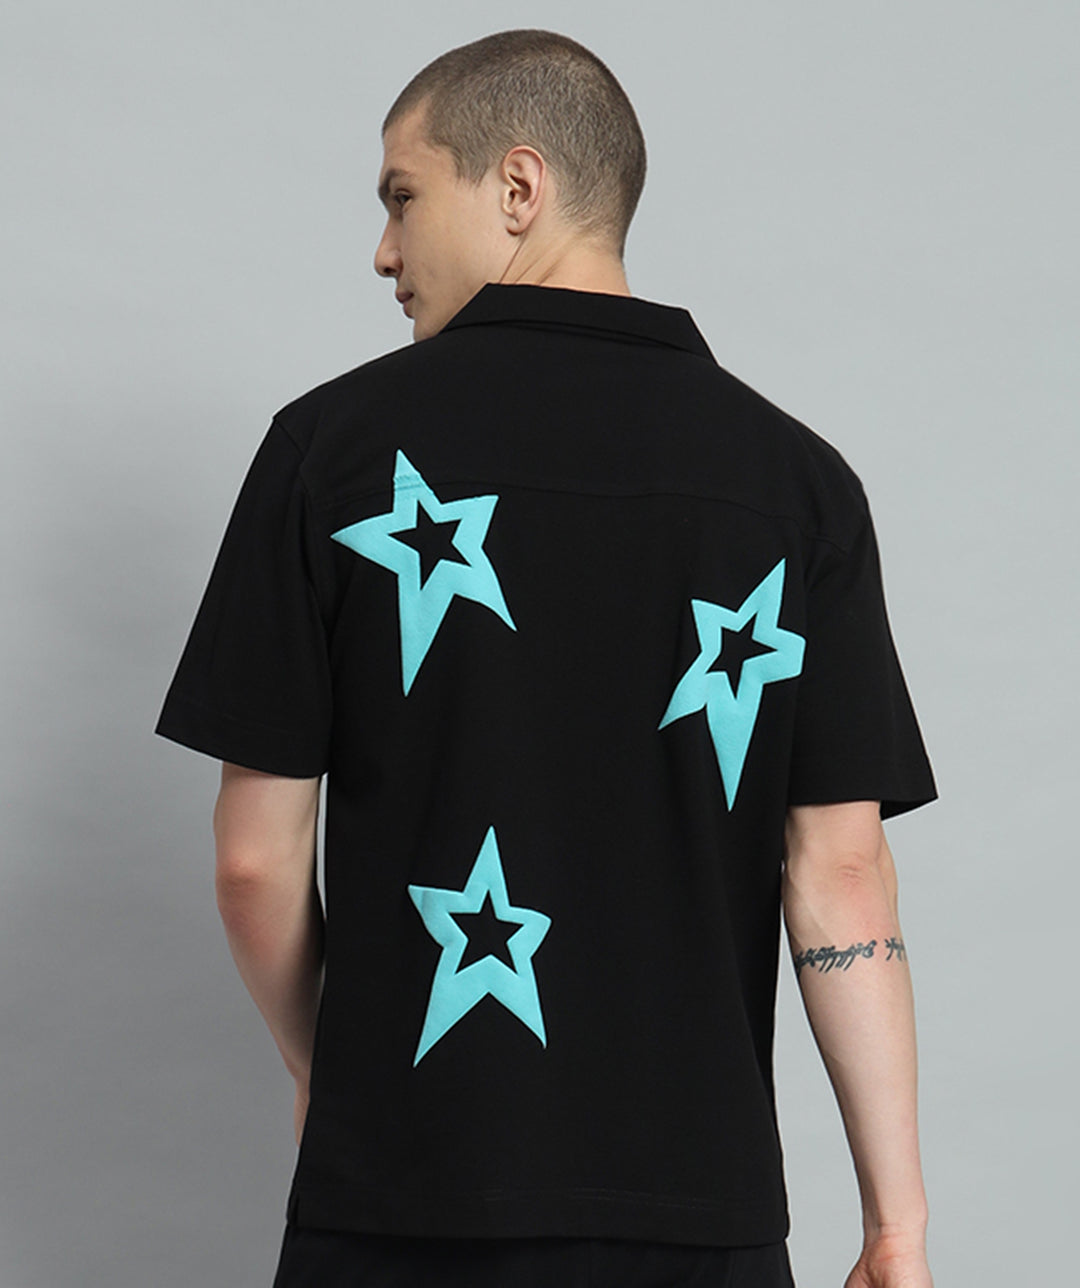 GRIFFEL Star Printed Regular Fit Bowling Shirt